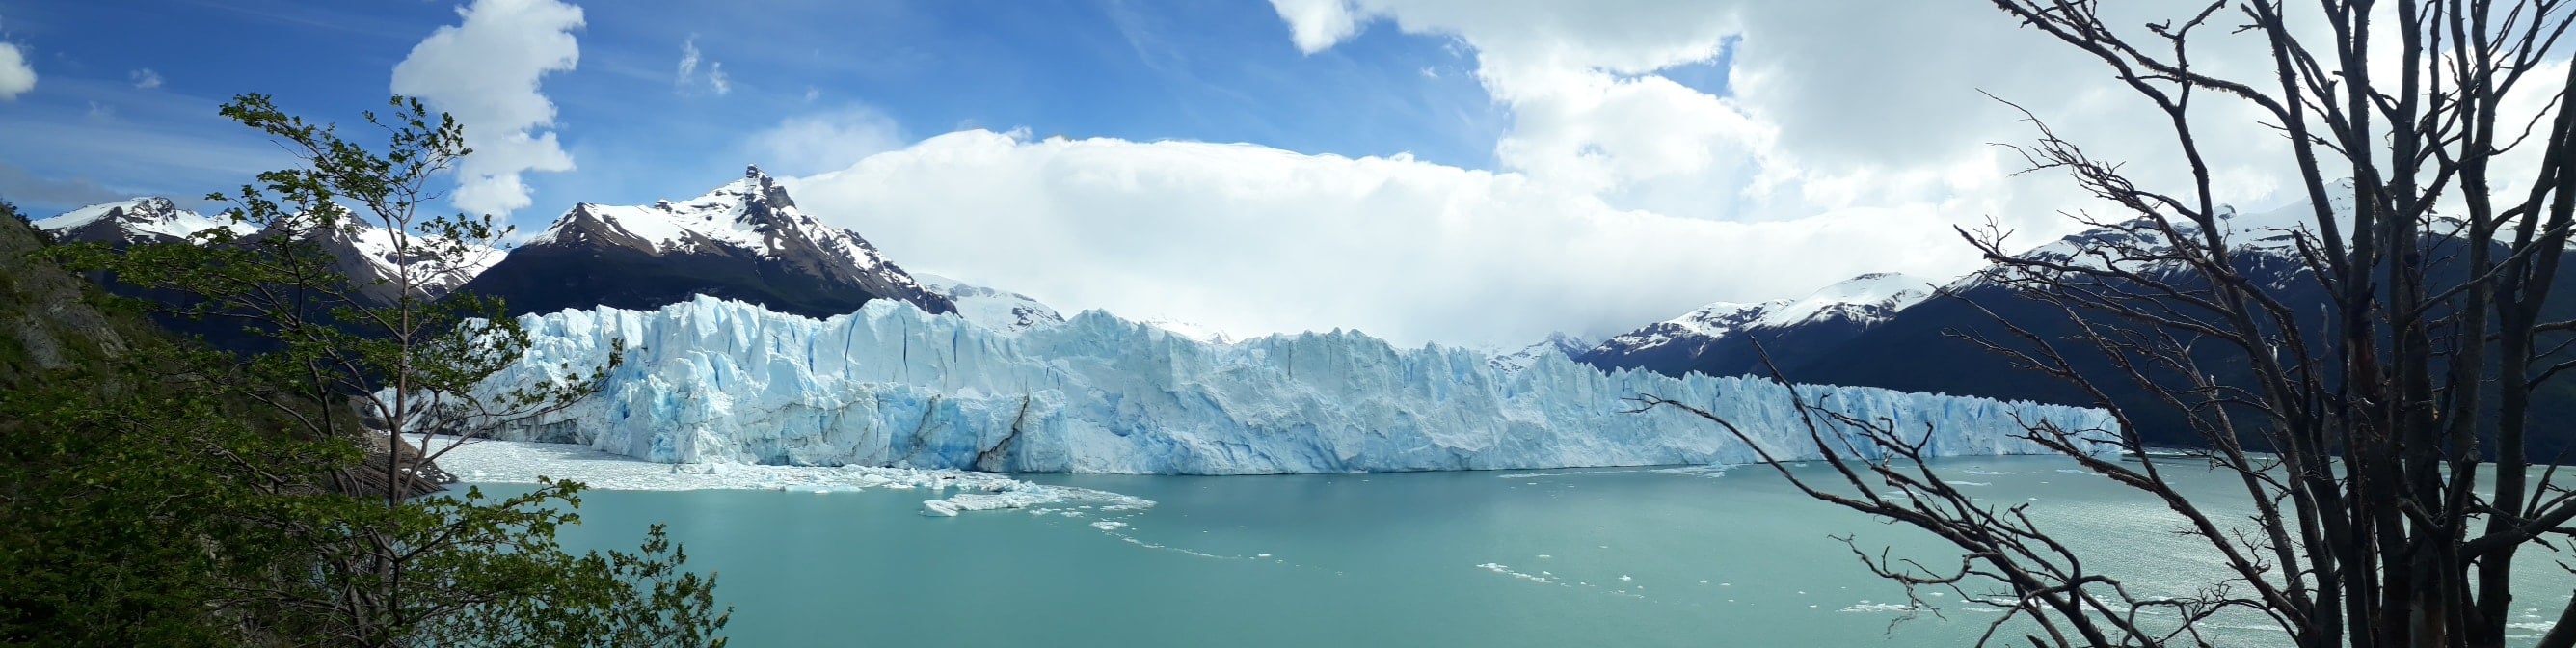 Perito Moreno glacier - Patagonia Argentina